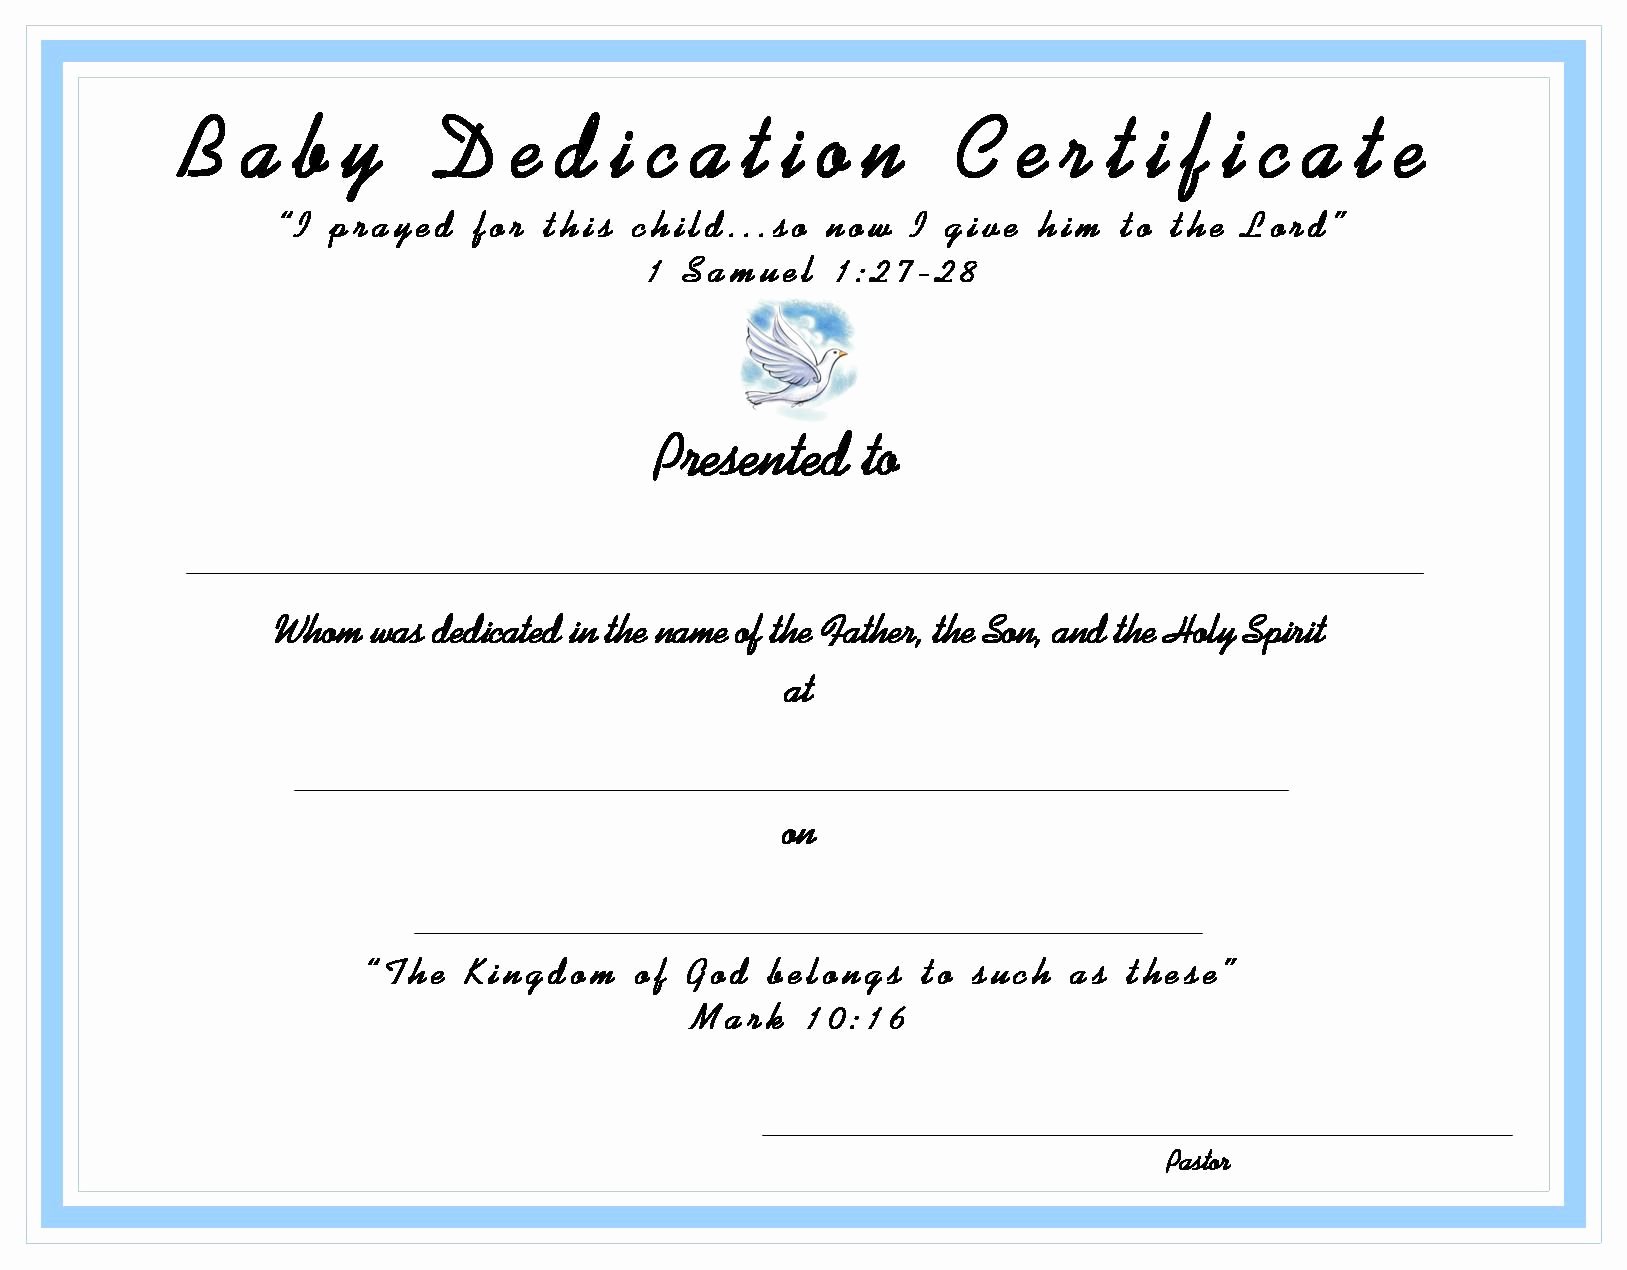 Baby Dedication Certificate Template Free Awesome Baby Dedication Certificate